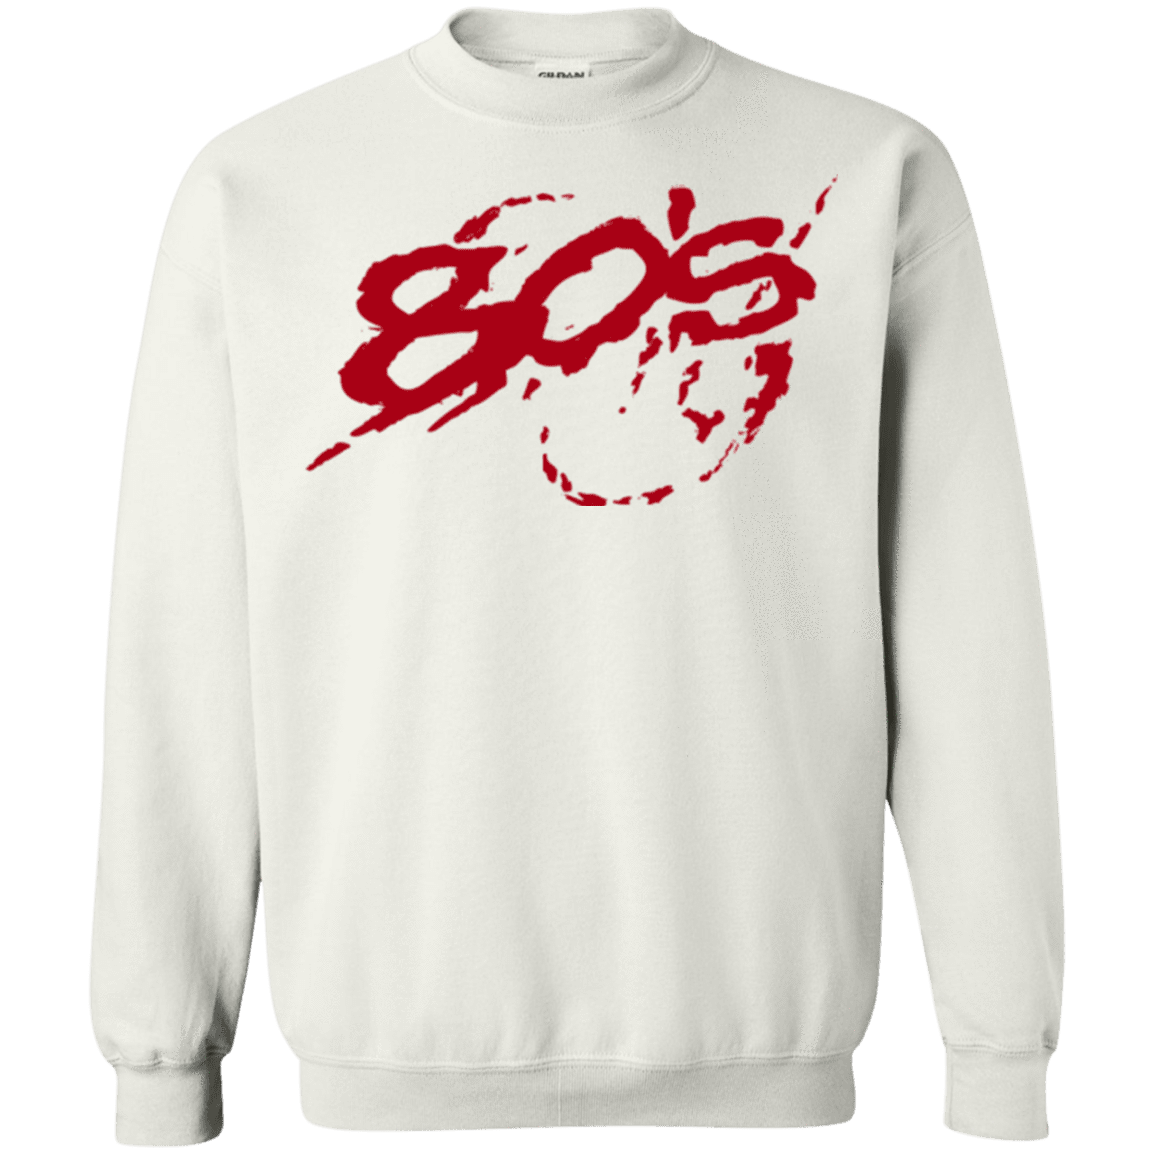 Sweatshirts White / Small 80s 300 Crewneck Sweatshirt